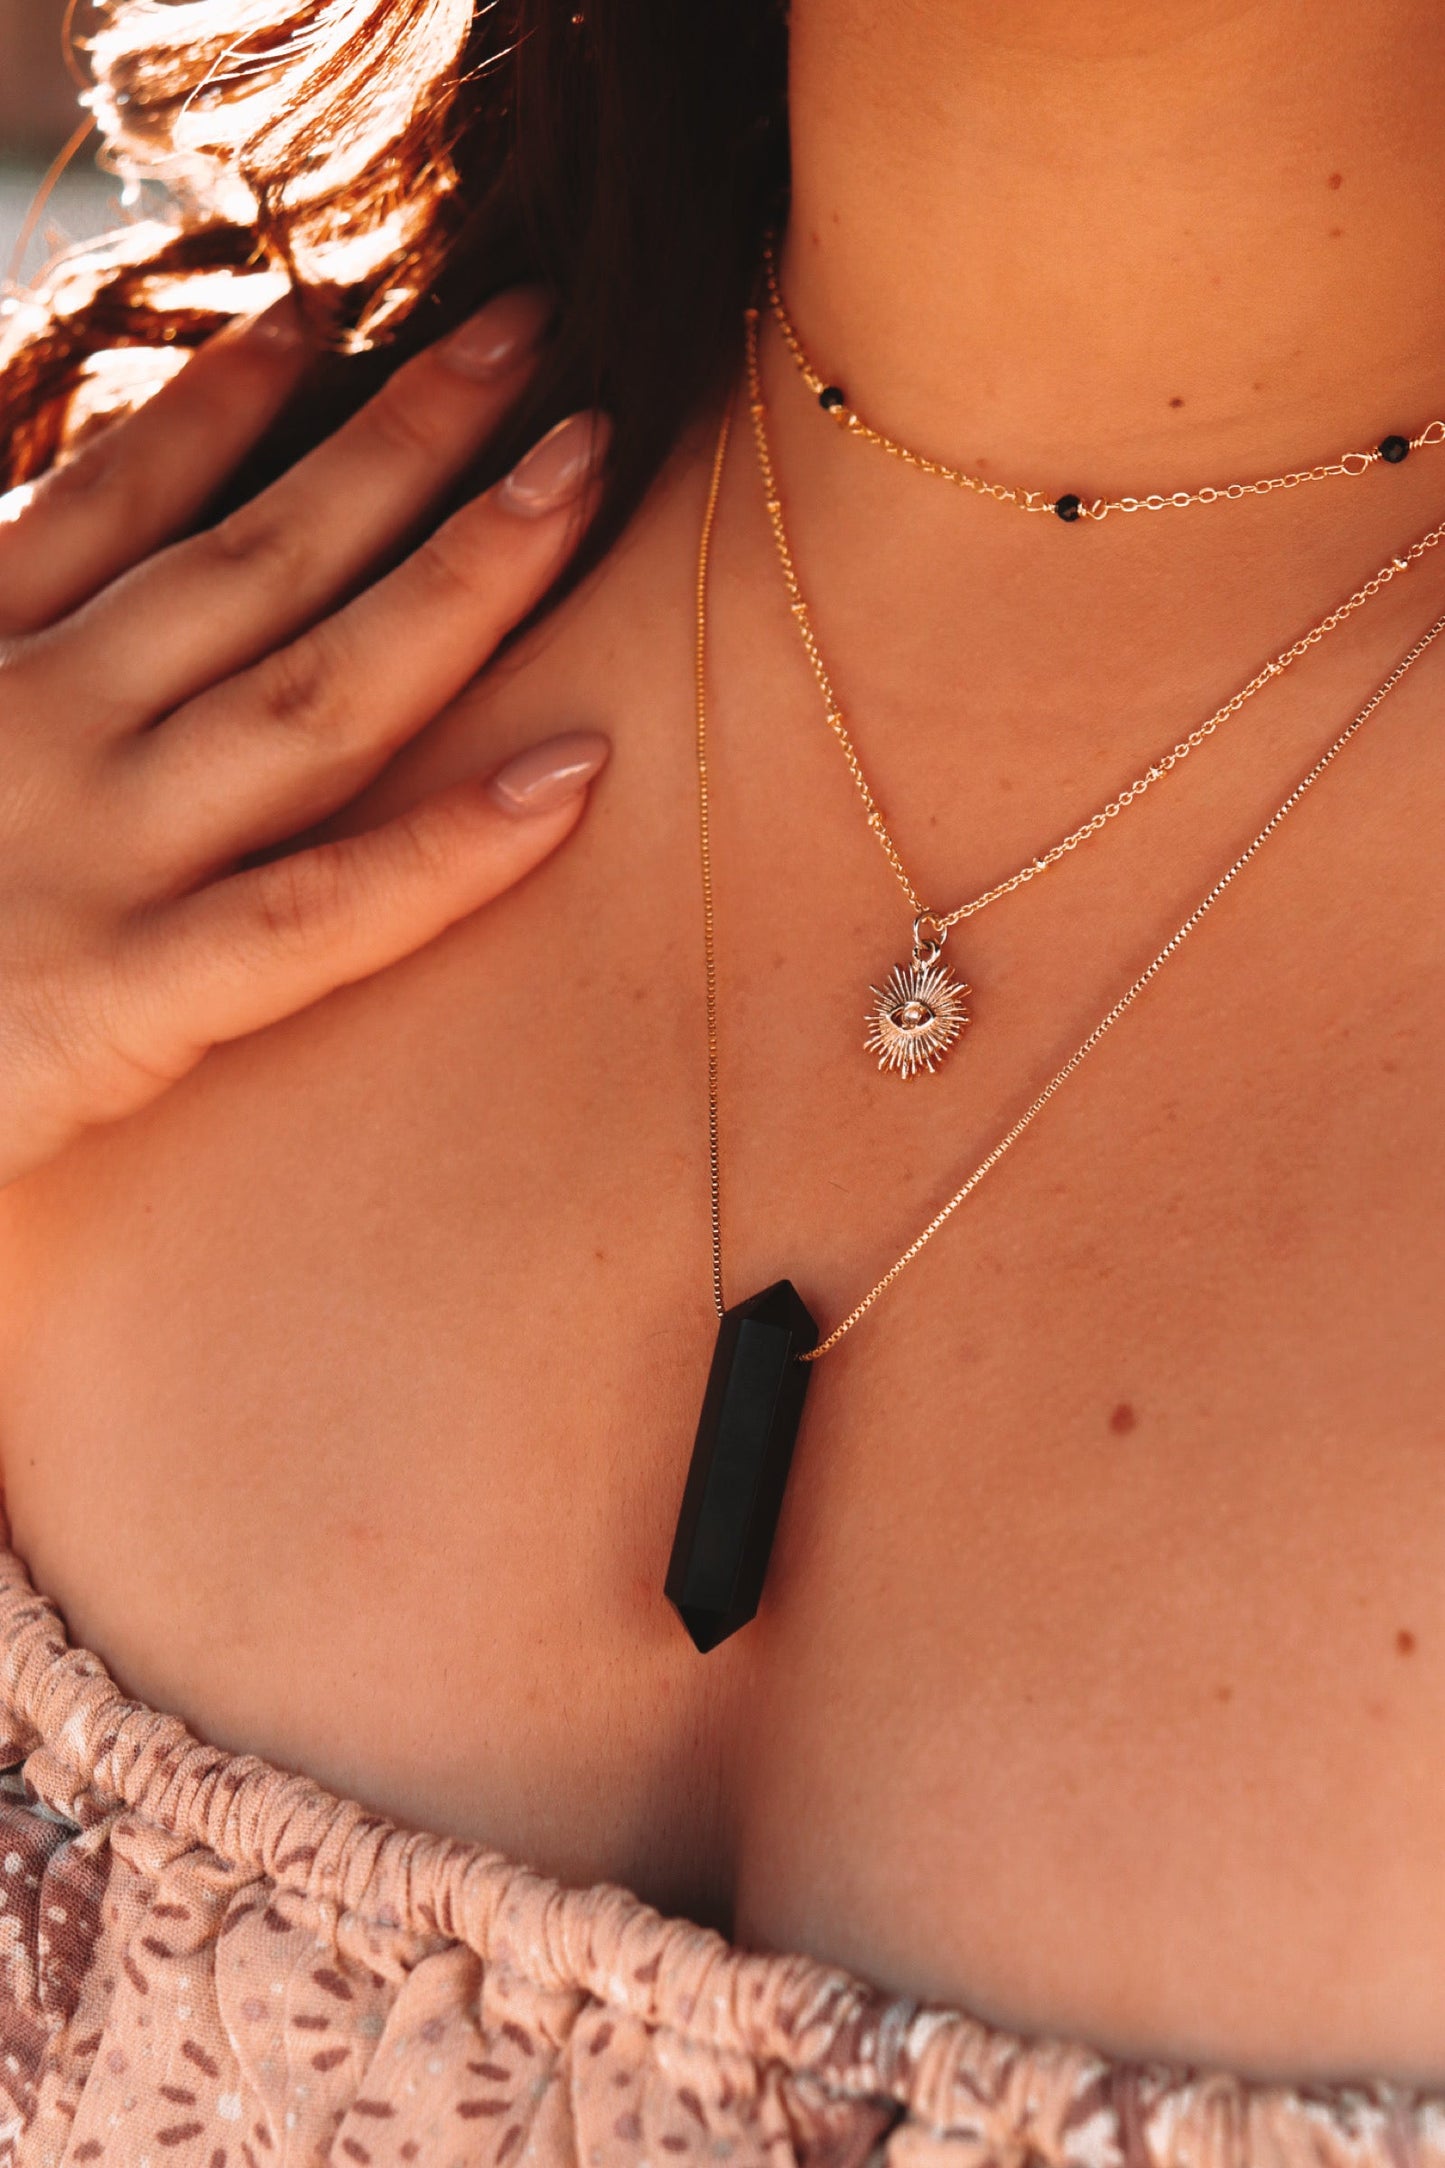 Goddess amulet | Amethyst point necklace by Terra Luna Sol